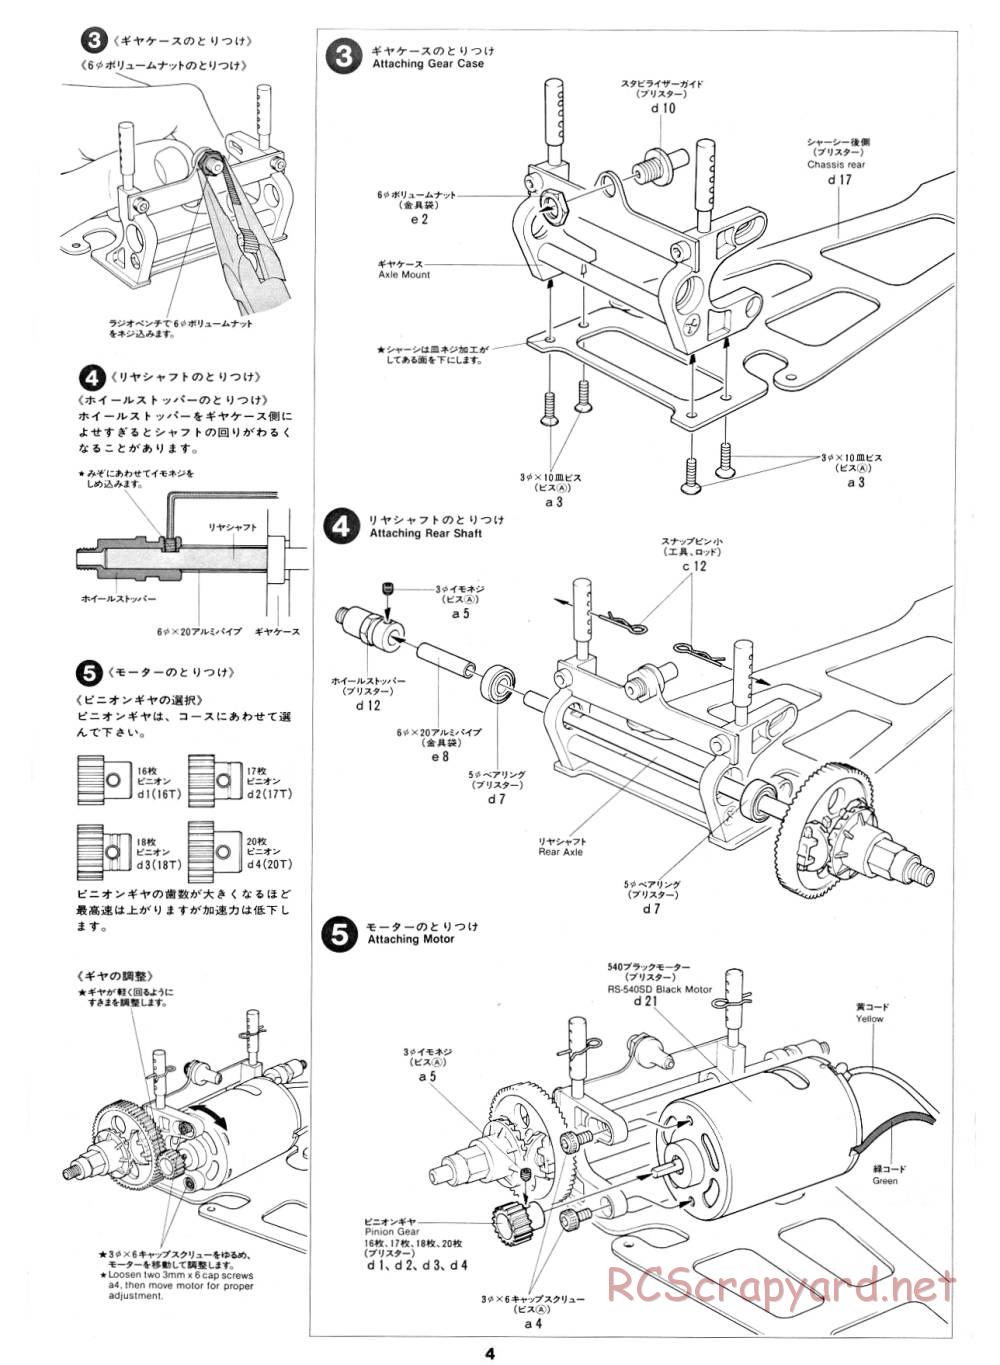 Tamiya - Porsche 956 - RM MK.5 - 58042 - Manual - Page 4